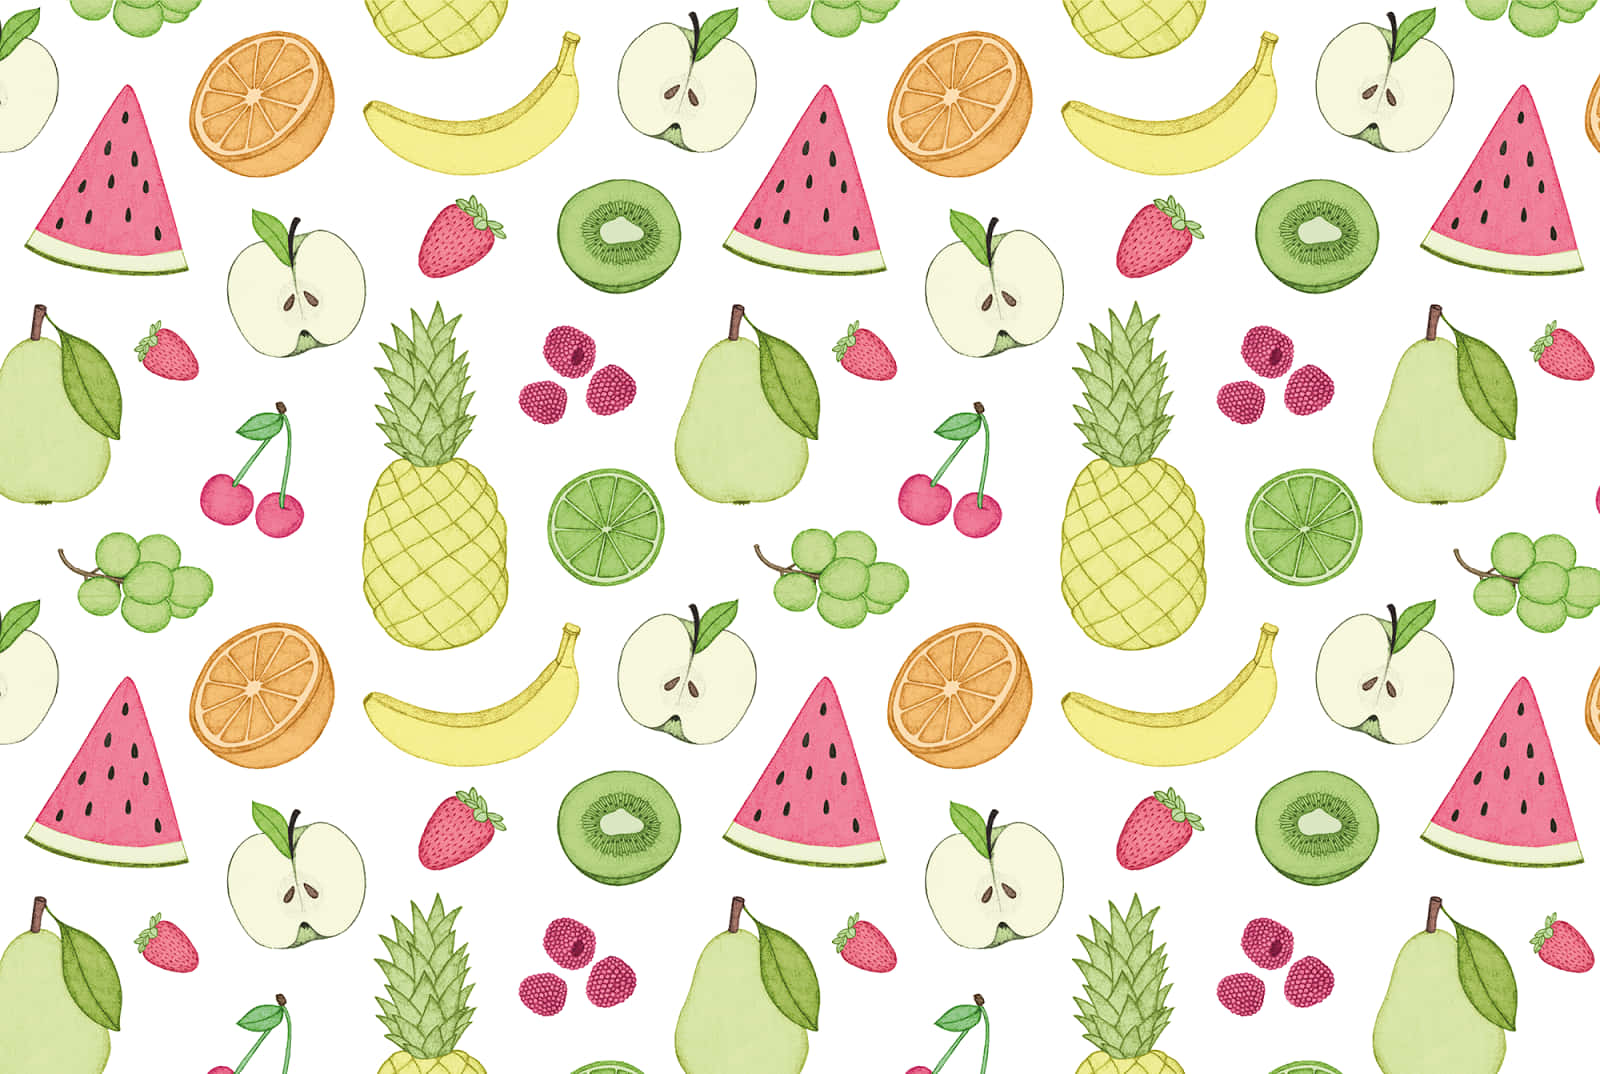 Free Cute Fruit Wallpaper Downloads, [100+] Cute Fruit Wallpapers for FREE  